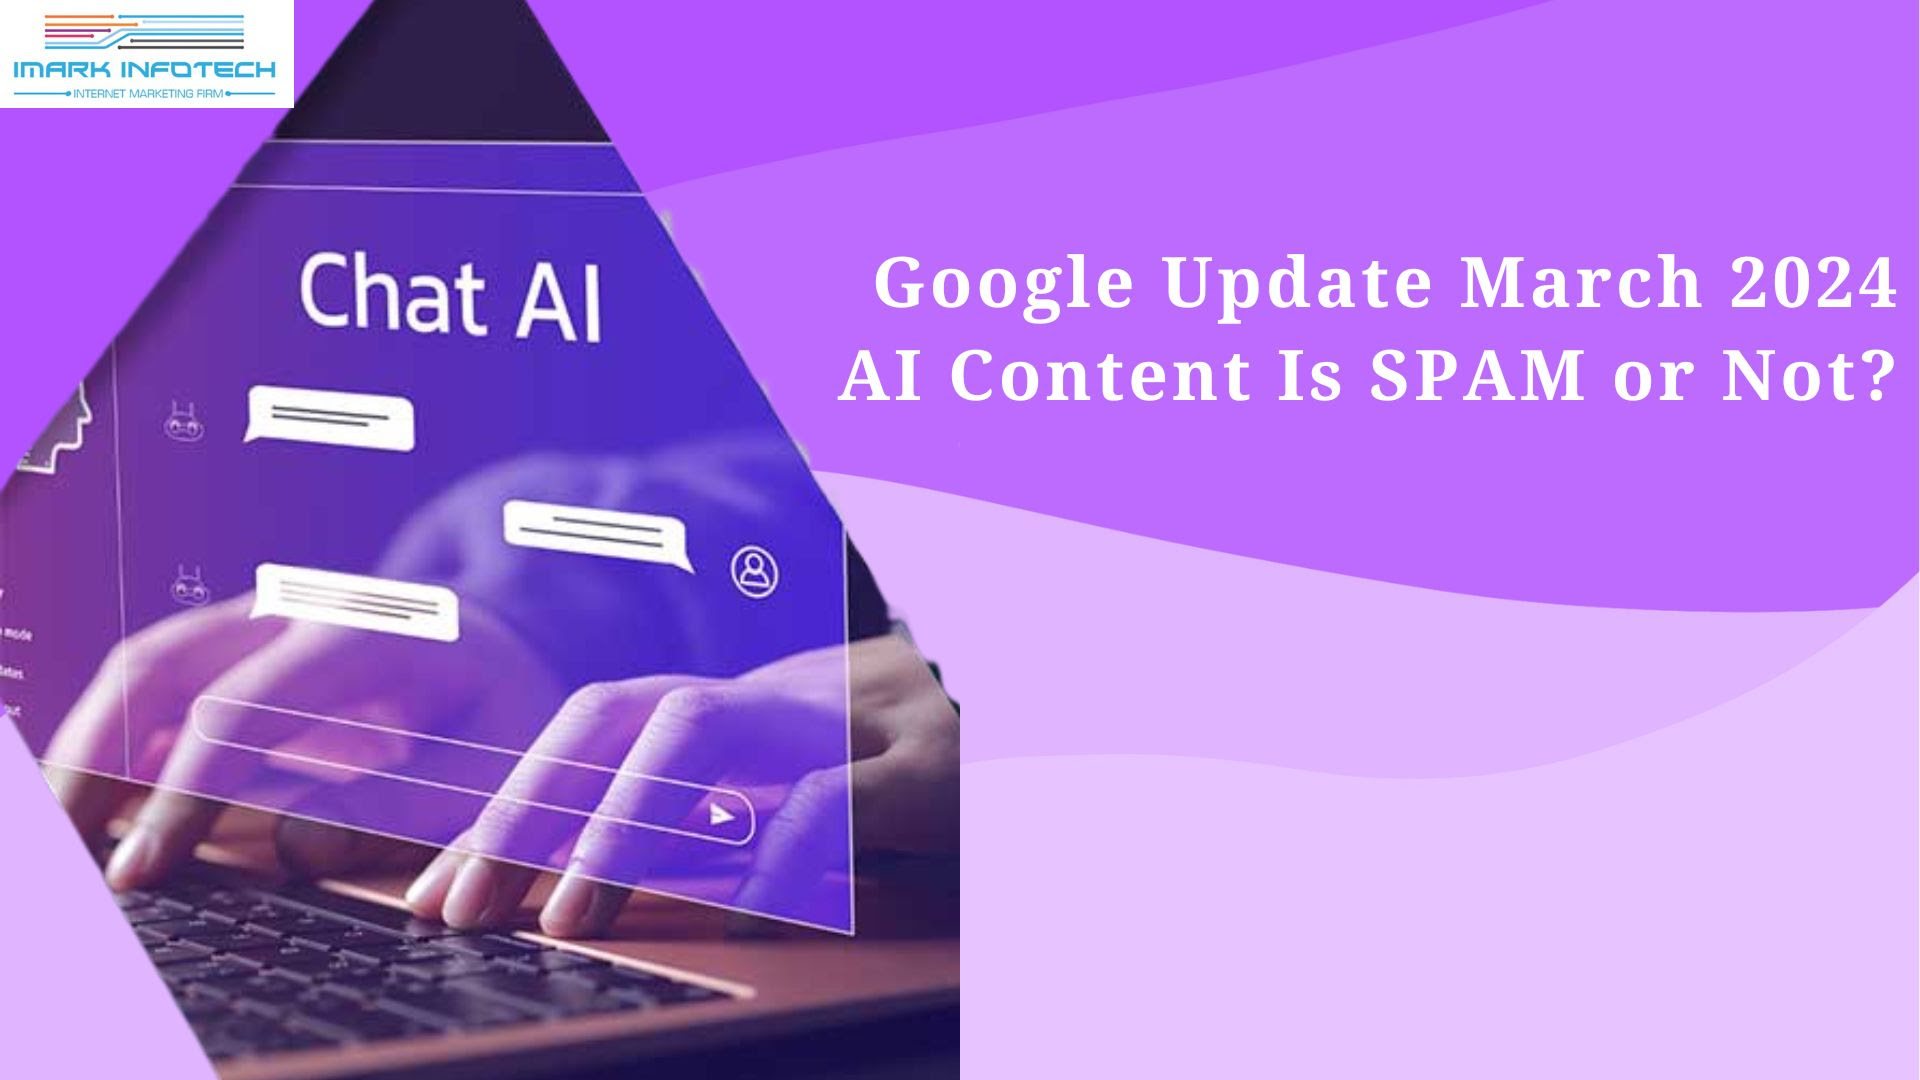 Chat AI - Digital Marketing Agency, SEO, Web Design & Development in PA - mediaEXPLOSIONinc. - Google Update March 2024 - AI Content Is SPAM? NO, It’s Not